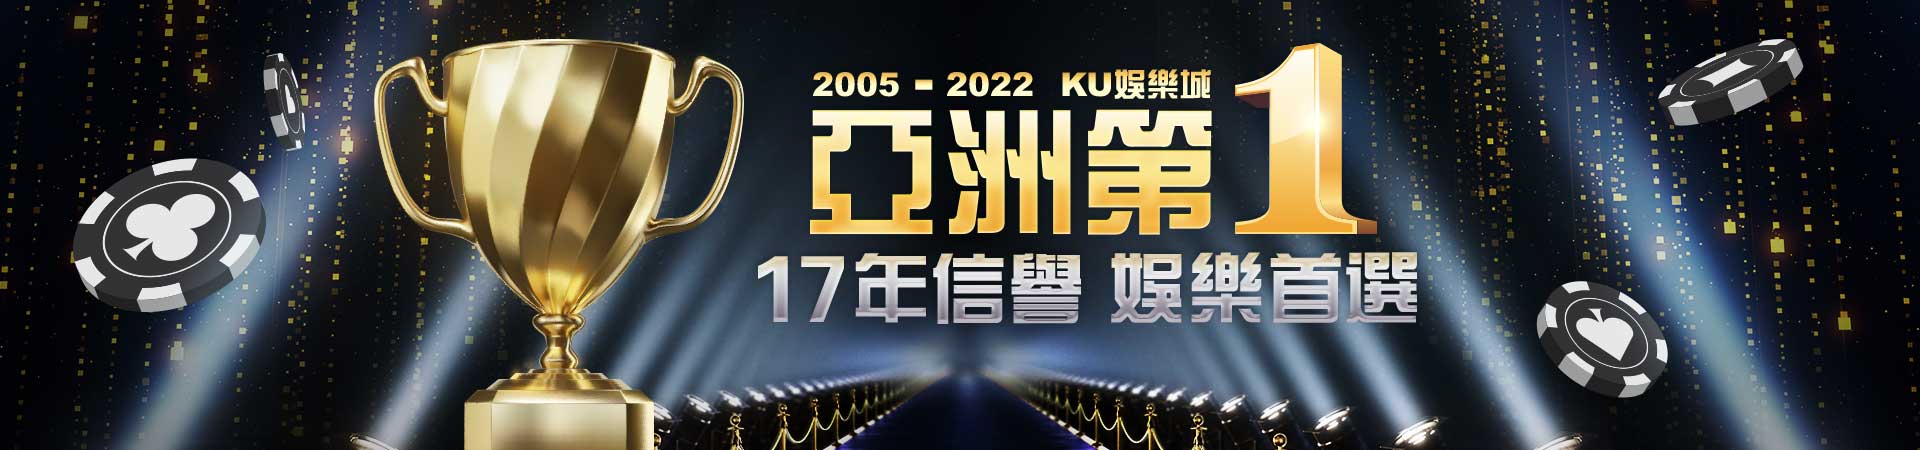 2005 - 2022 KU集團 - KU娛樂城 亞洲第1, 17年信譽 線上娛樂首選